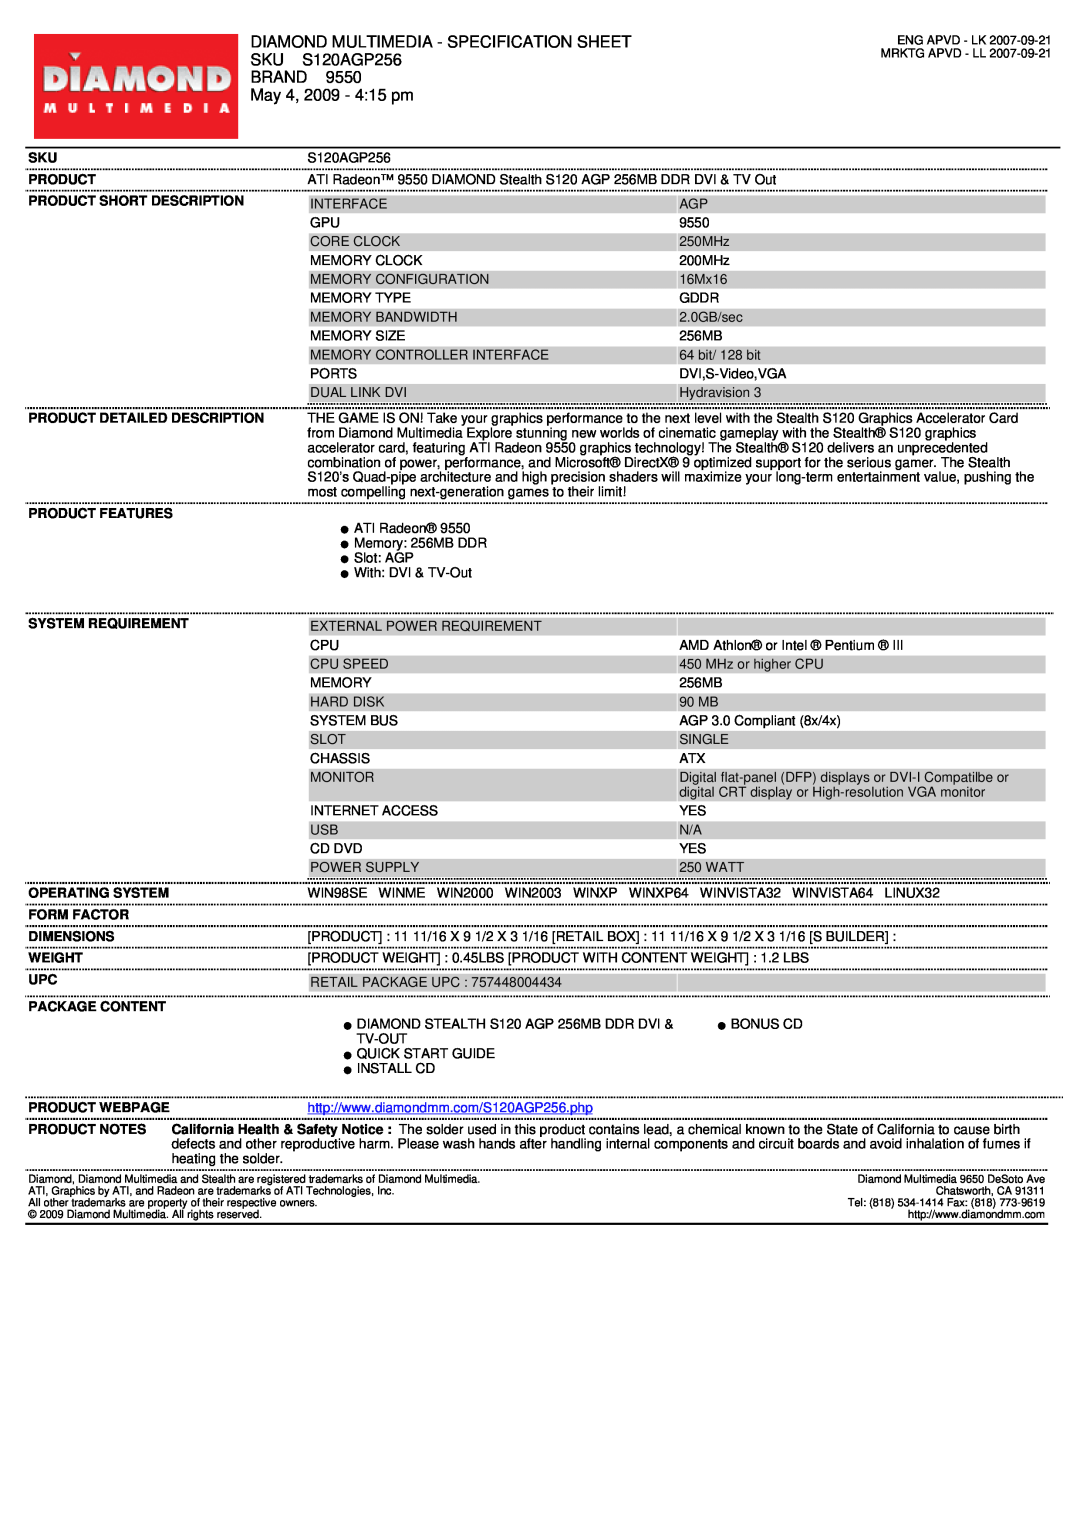 Diamond Multimedia 9550 specifications Diamond Multimedia - Specification Sheet, S120AGP256, Brand, May 4, 2009 - 415 pm 